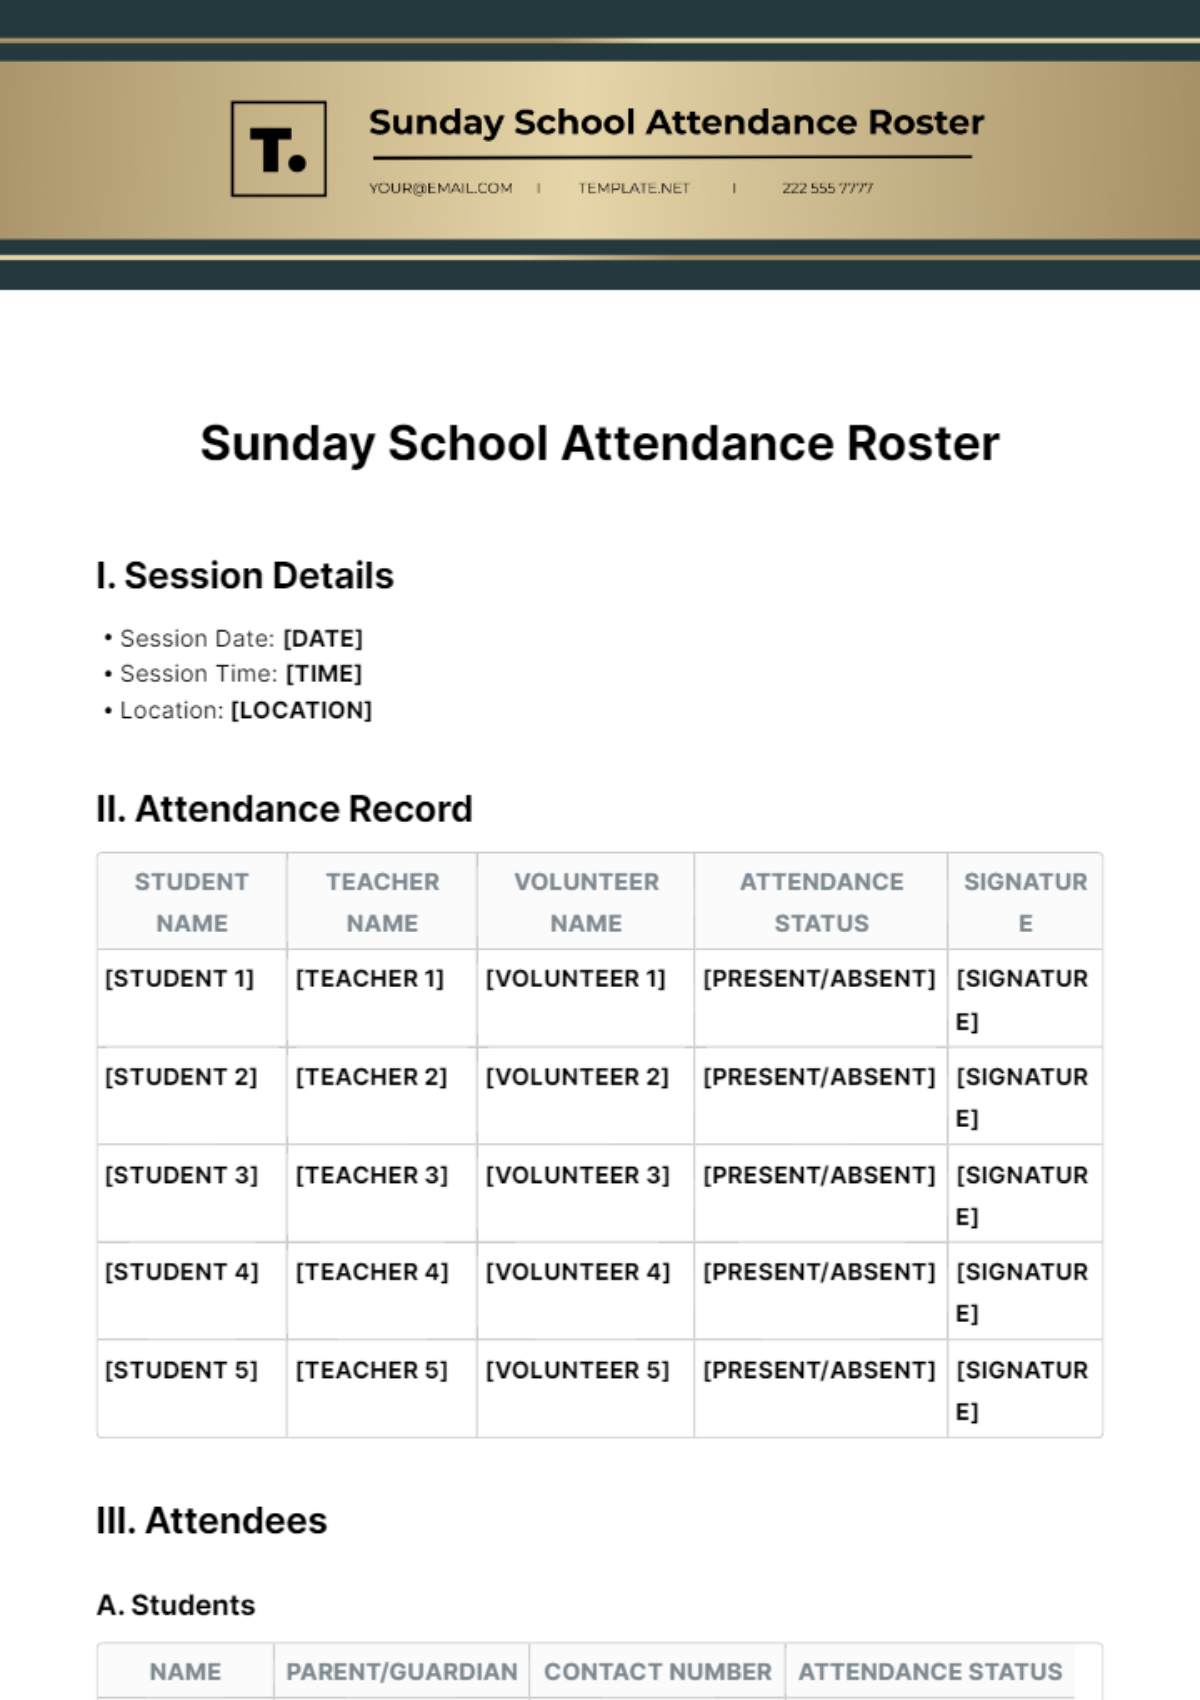 Sunday School Attendance Roster Template